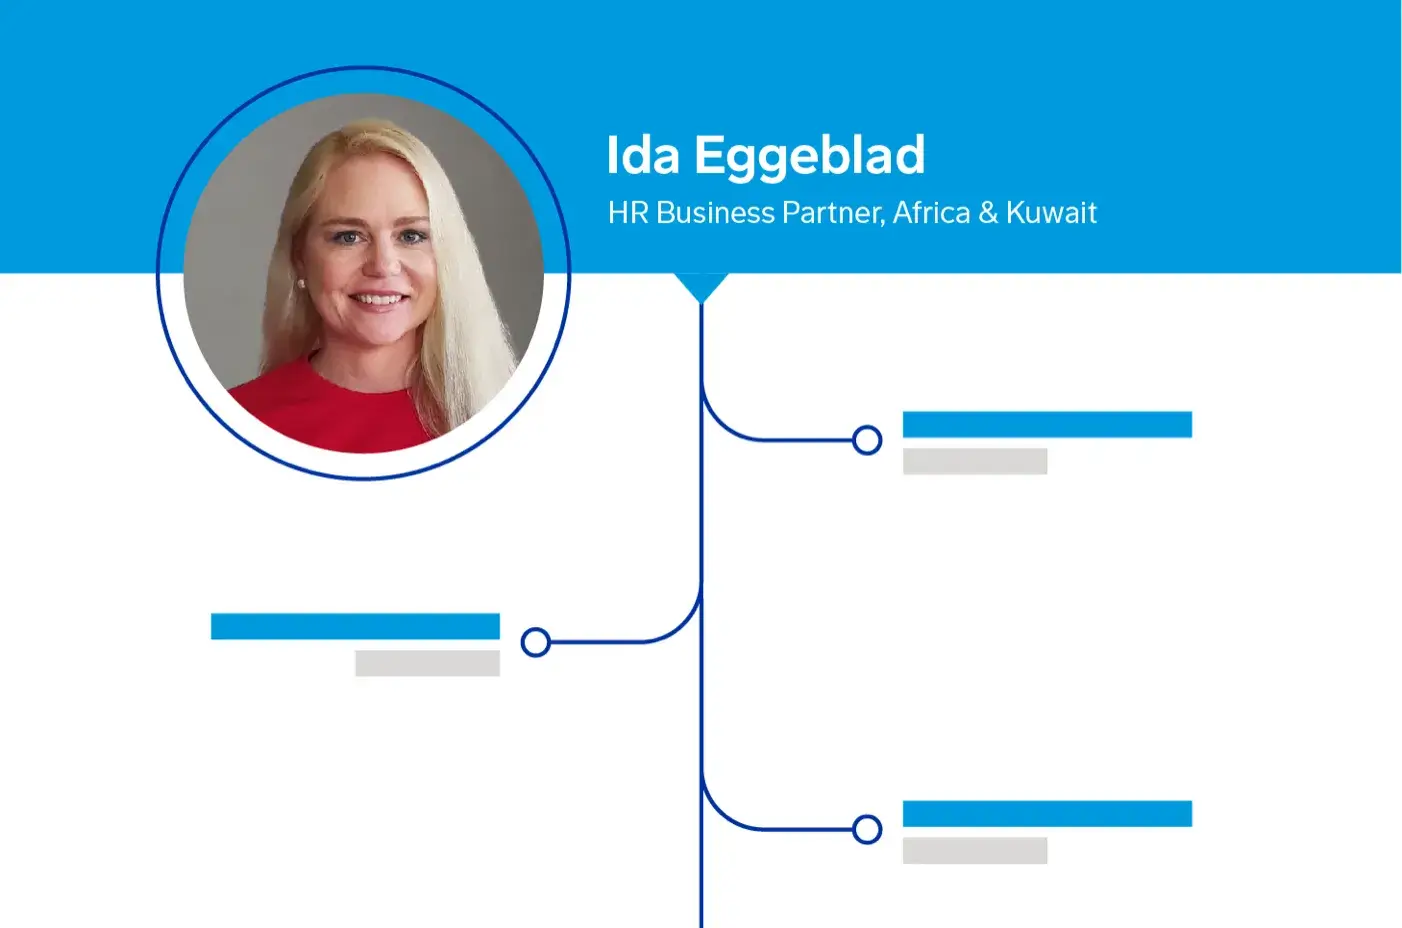 Ida Eggeblad, Human Resources Business Partner